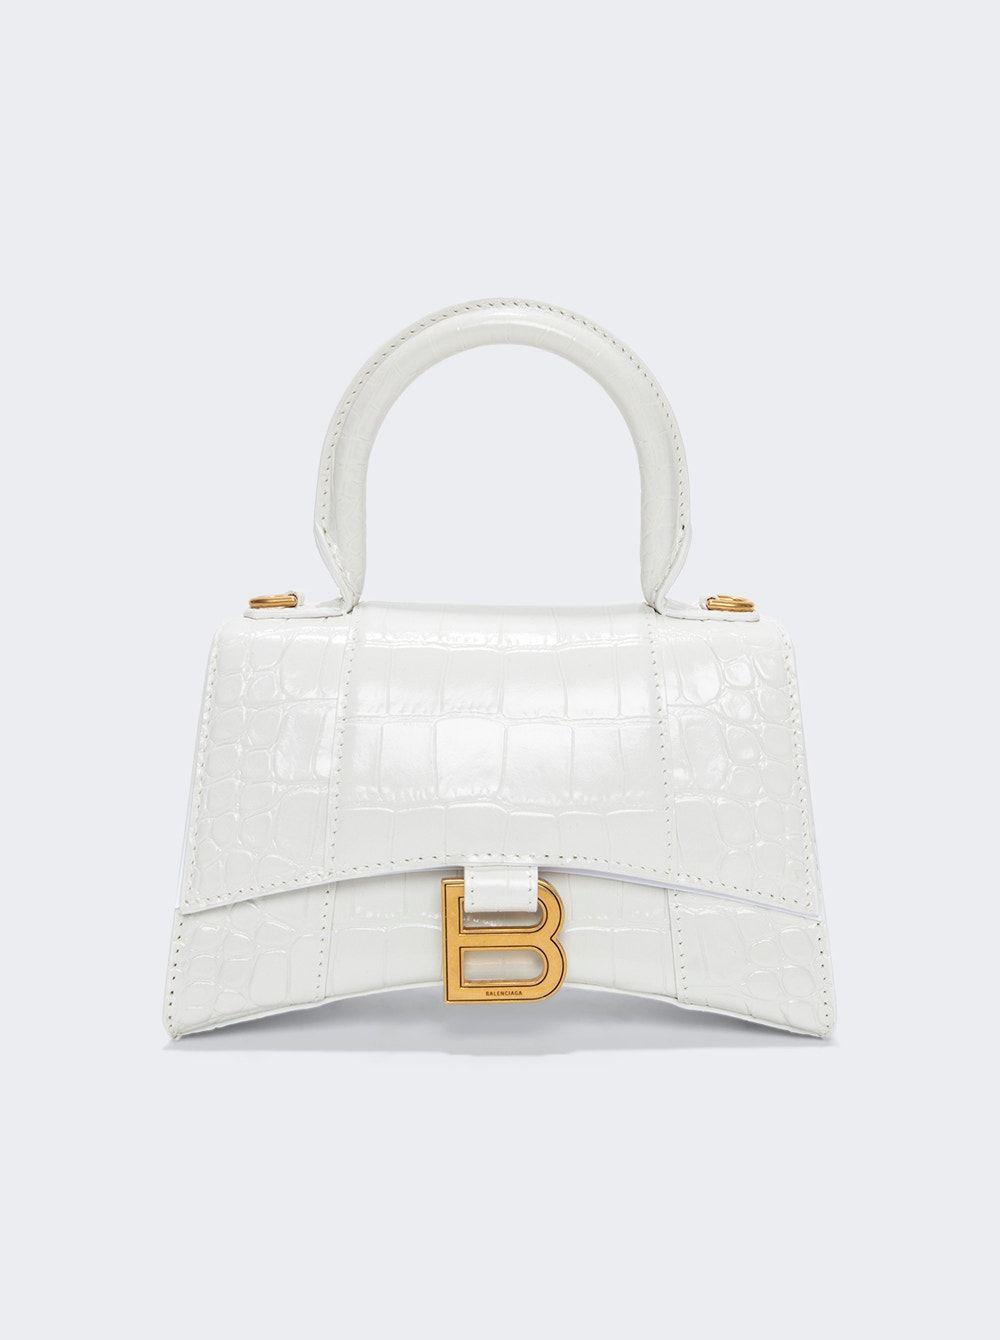 Balenciaga Hourglass Crocodile Embossed Top Handle Bag in White | Lyst